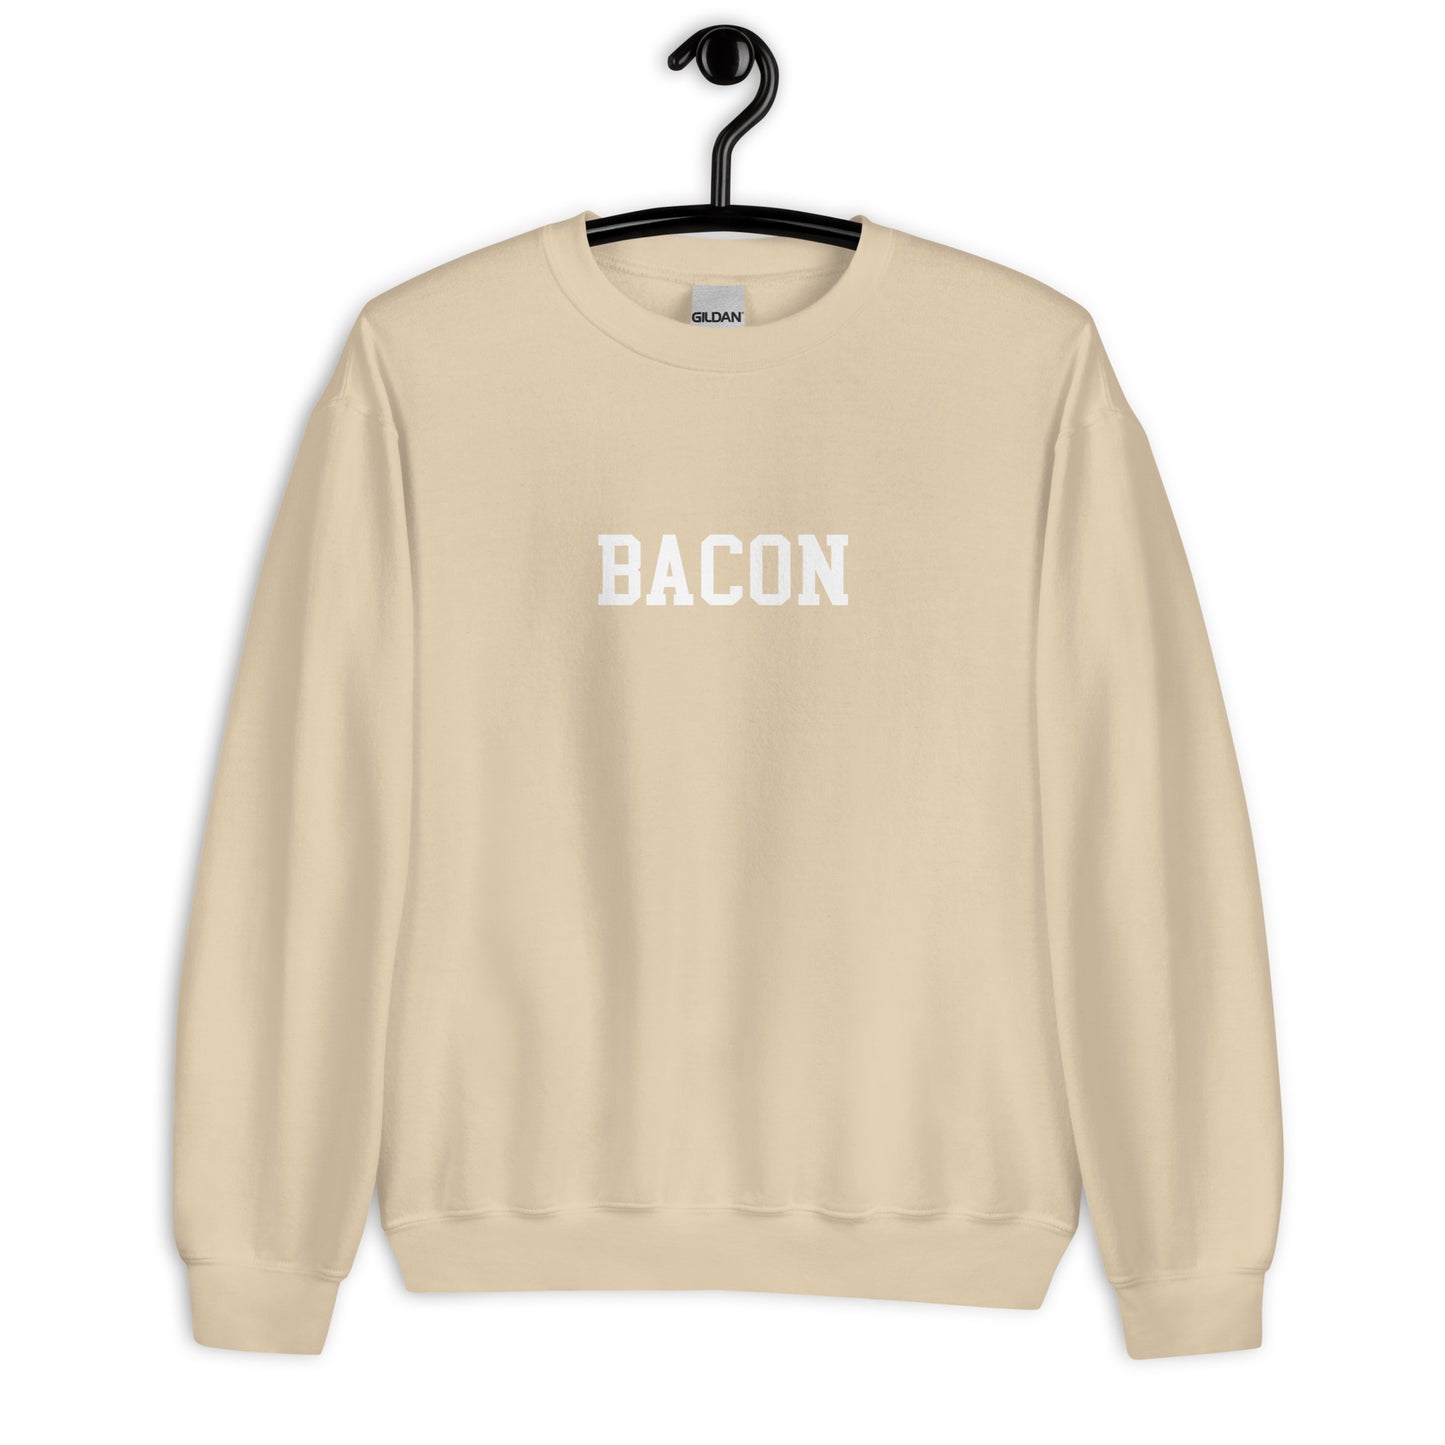 Bacon Sweatshirt - Straight Font